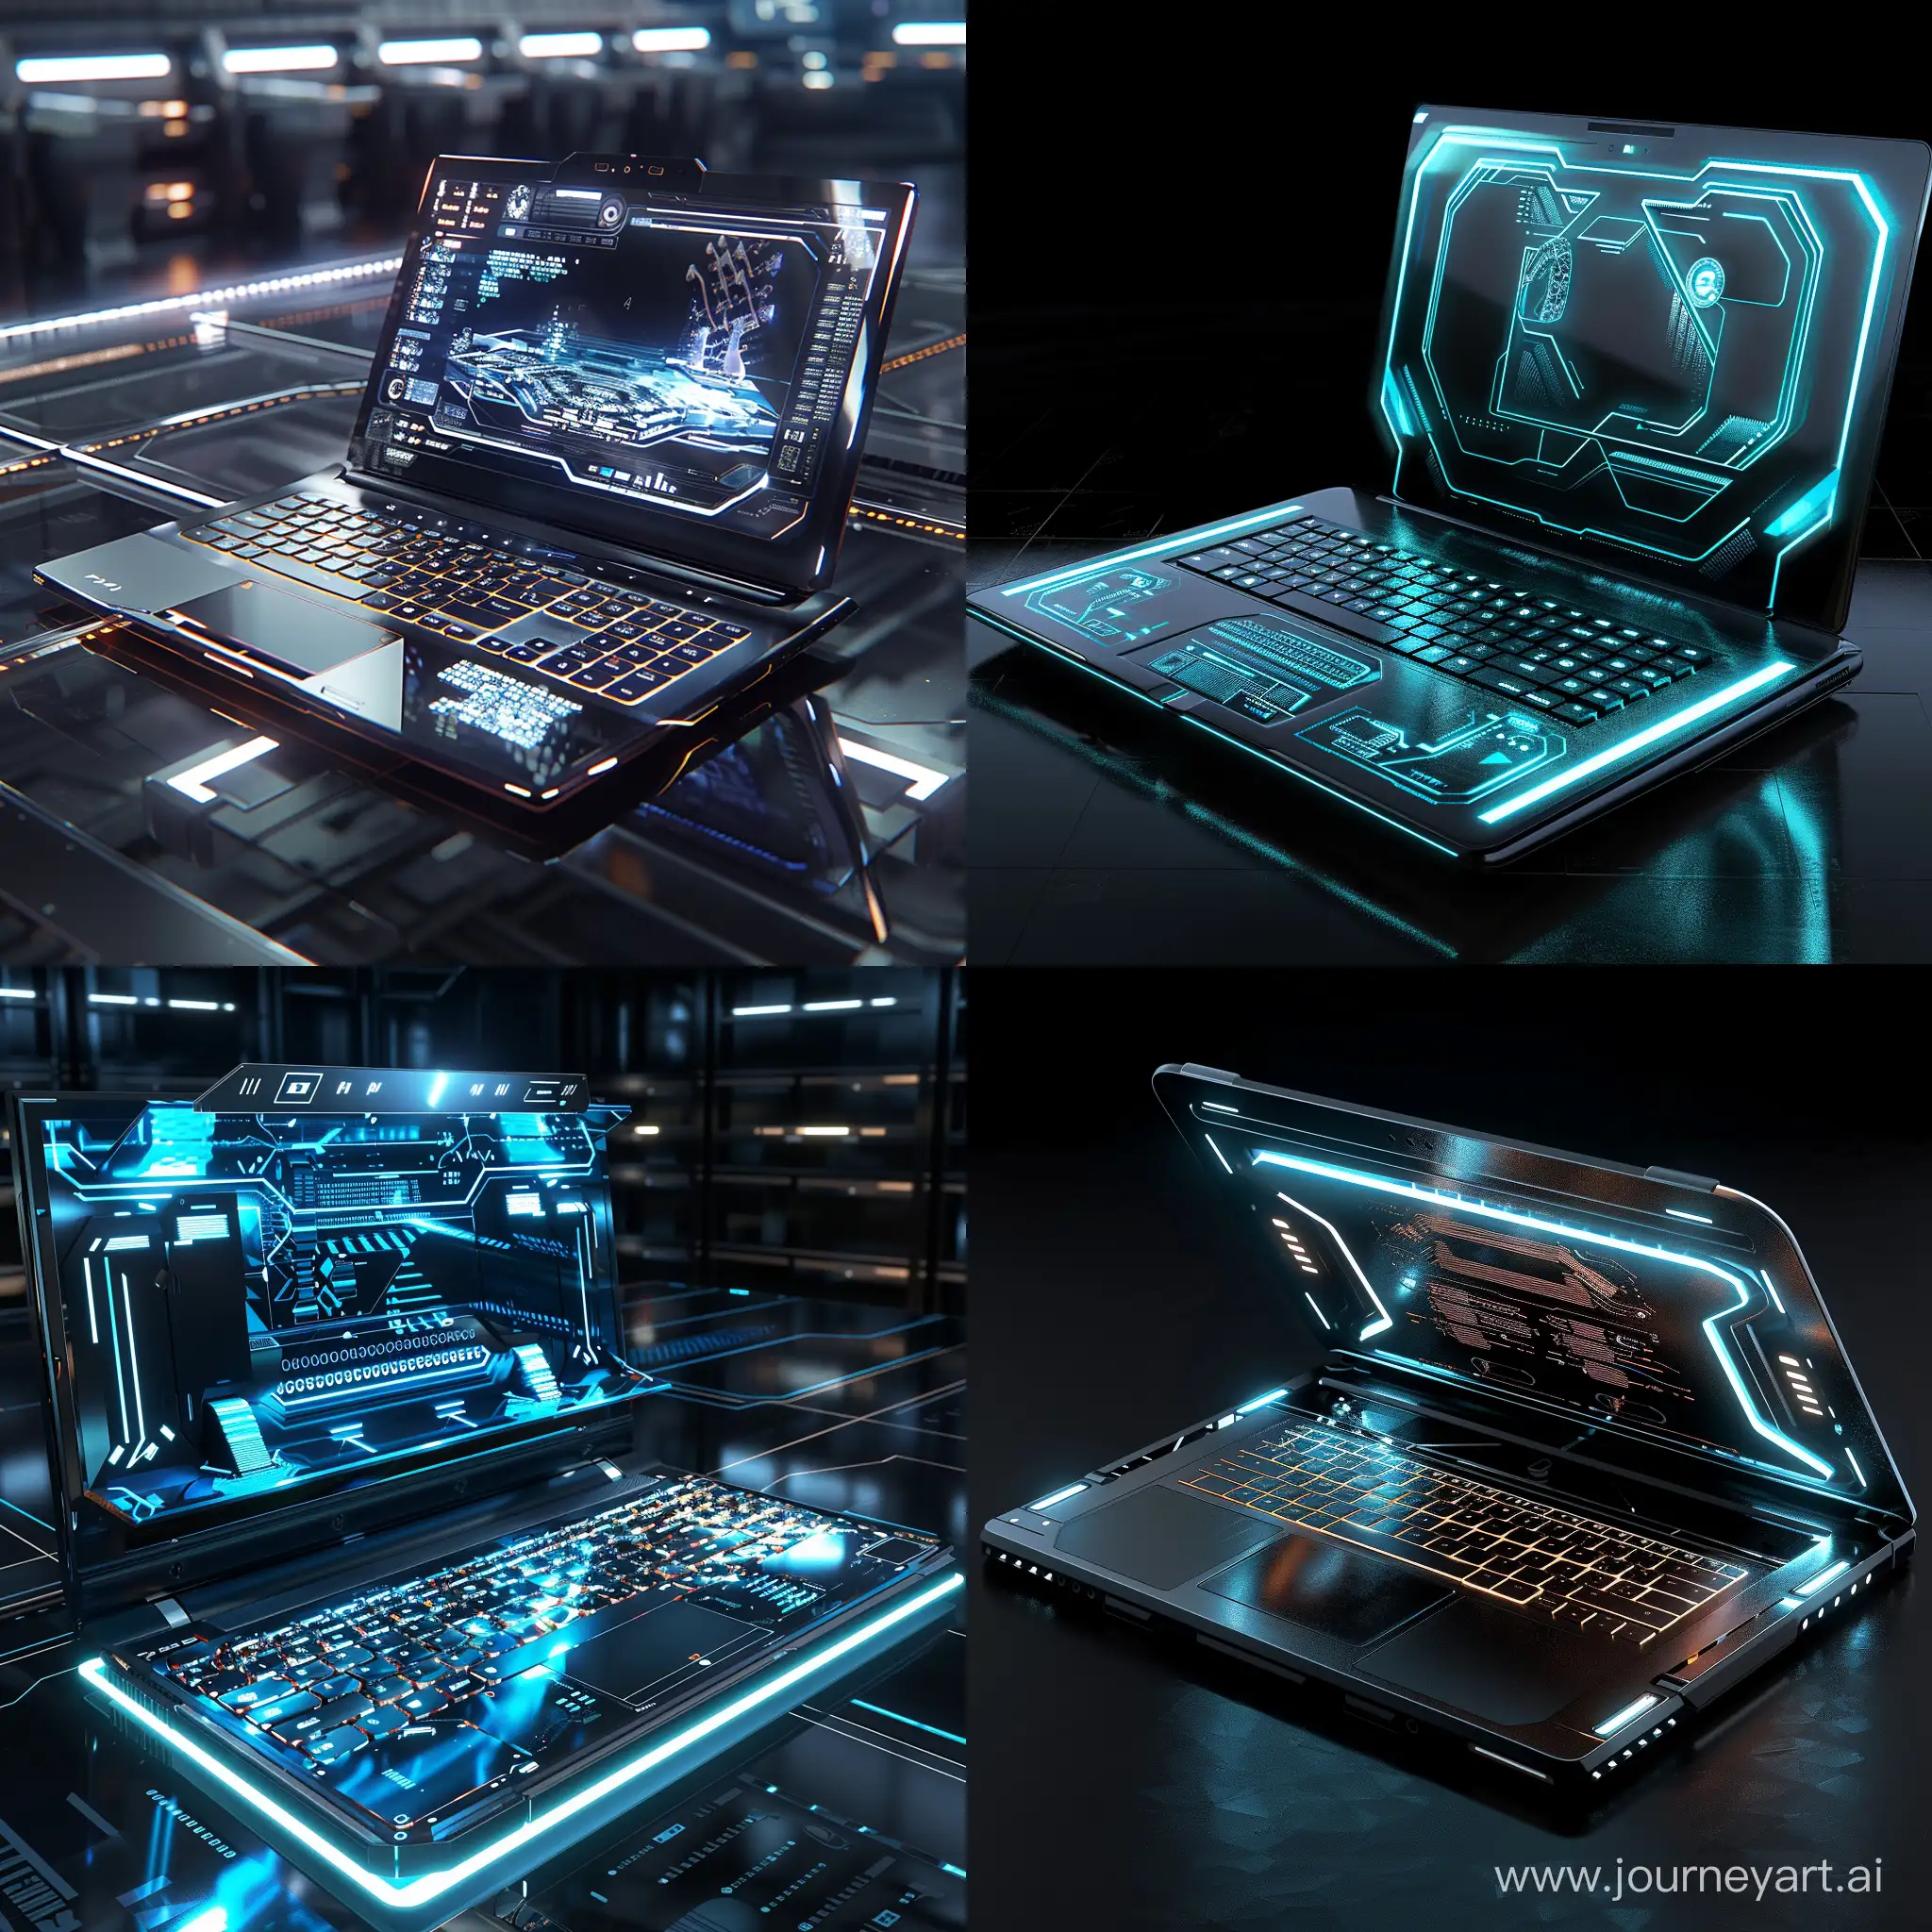 Futuristic-Laptop-in-HighTech-World-Octane-Render-Technology